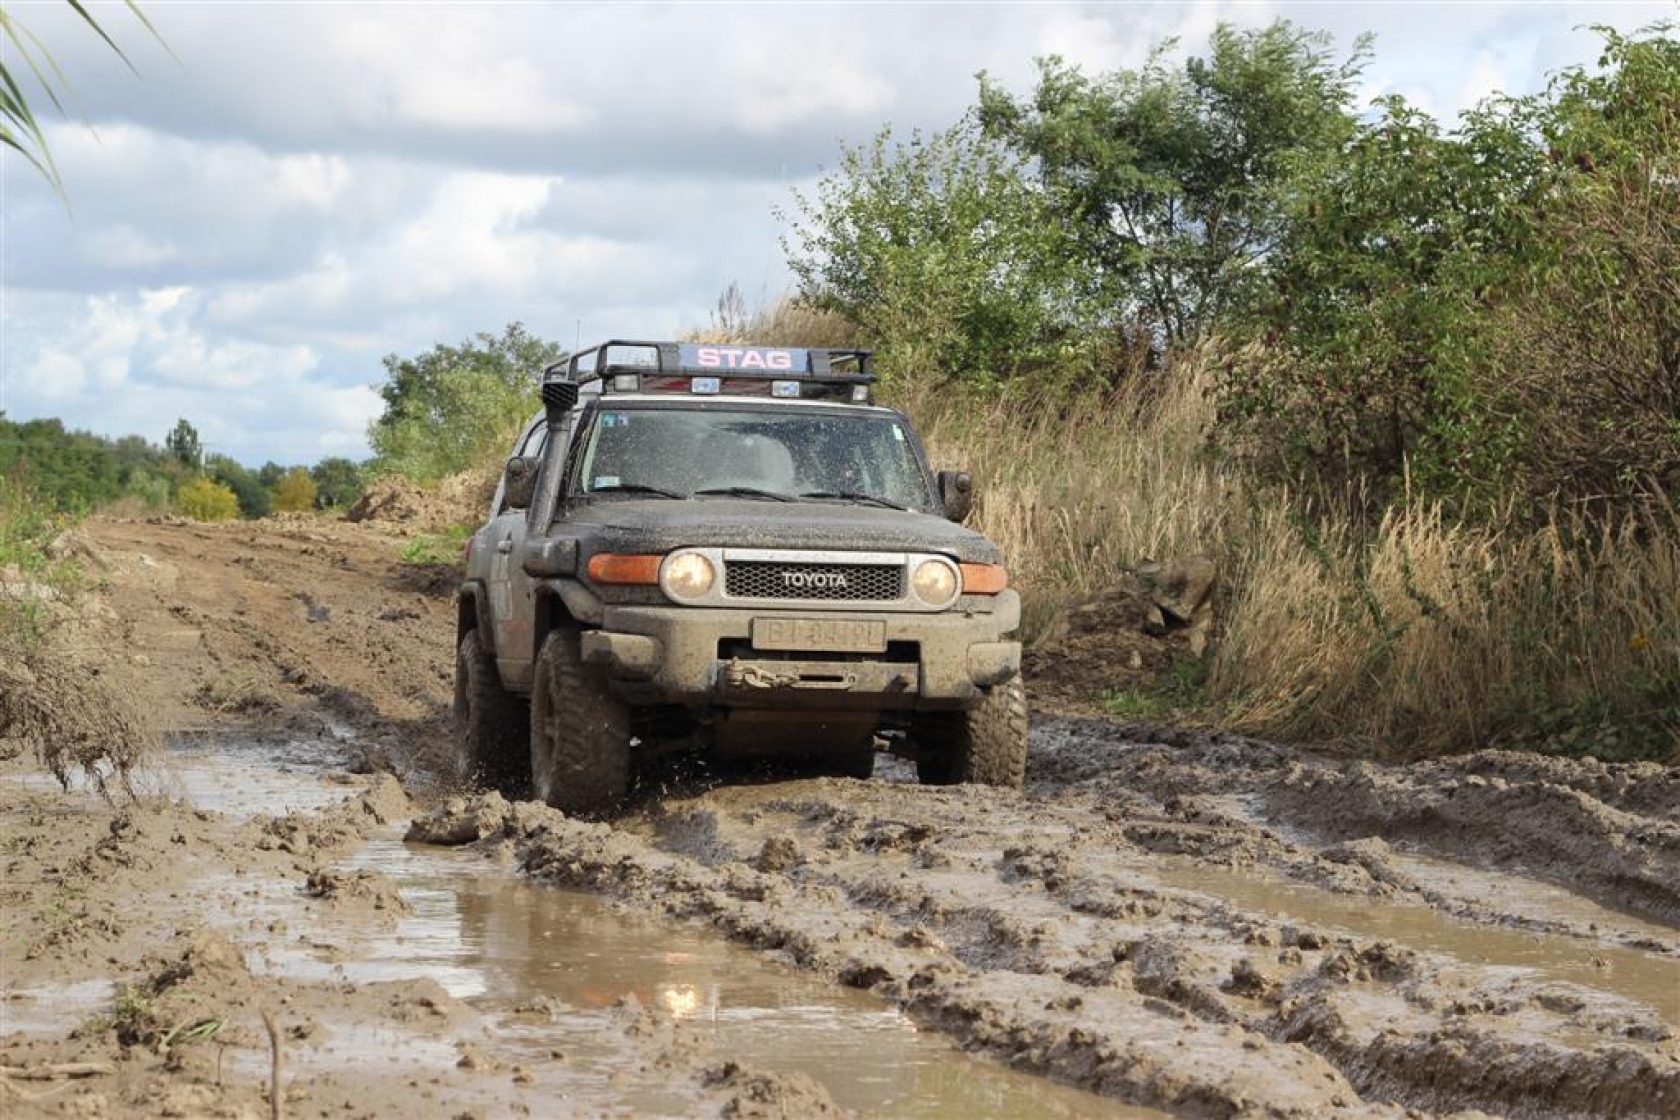 Toyota Fj Cruiser Lpg By Stag Gas In The Mud Gazeo Com